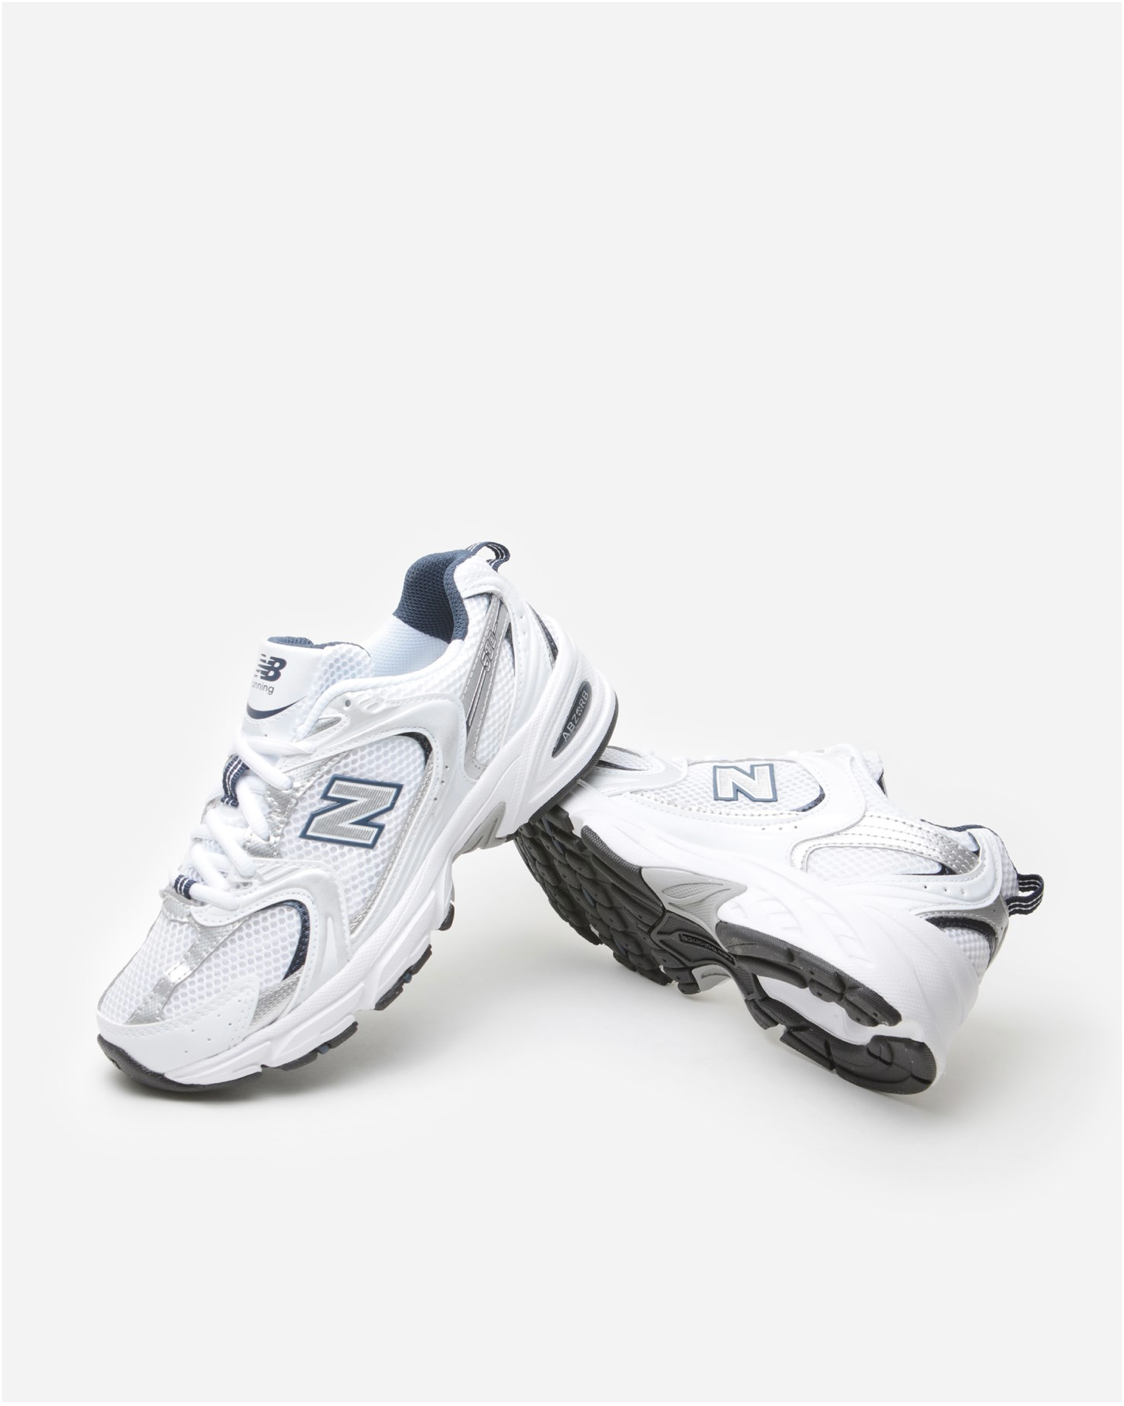 
                  
                    <tc>New Balance MR530SG White/Navy Unisex Running Sneaker</tc>
                  
                